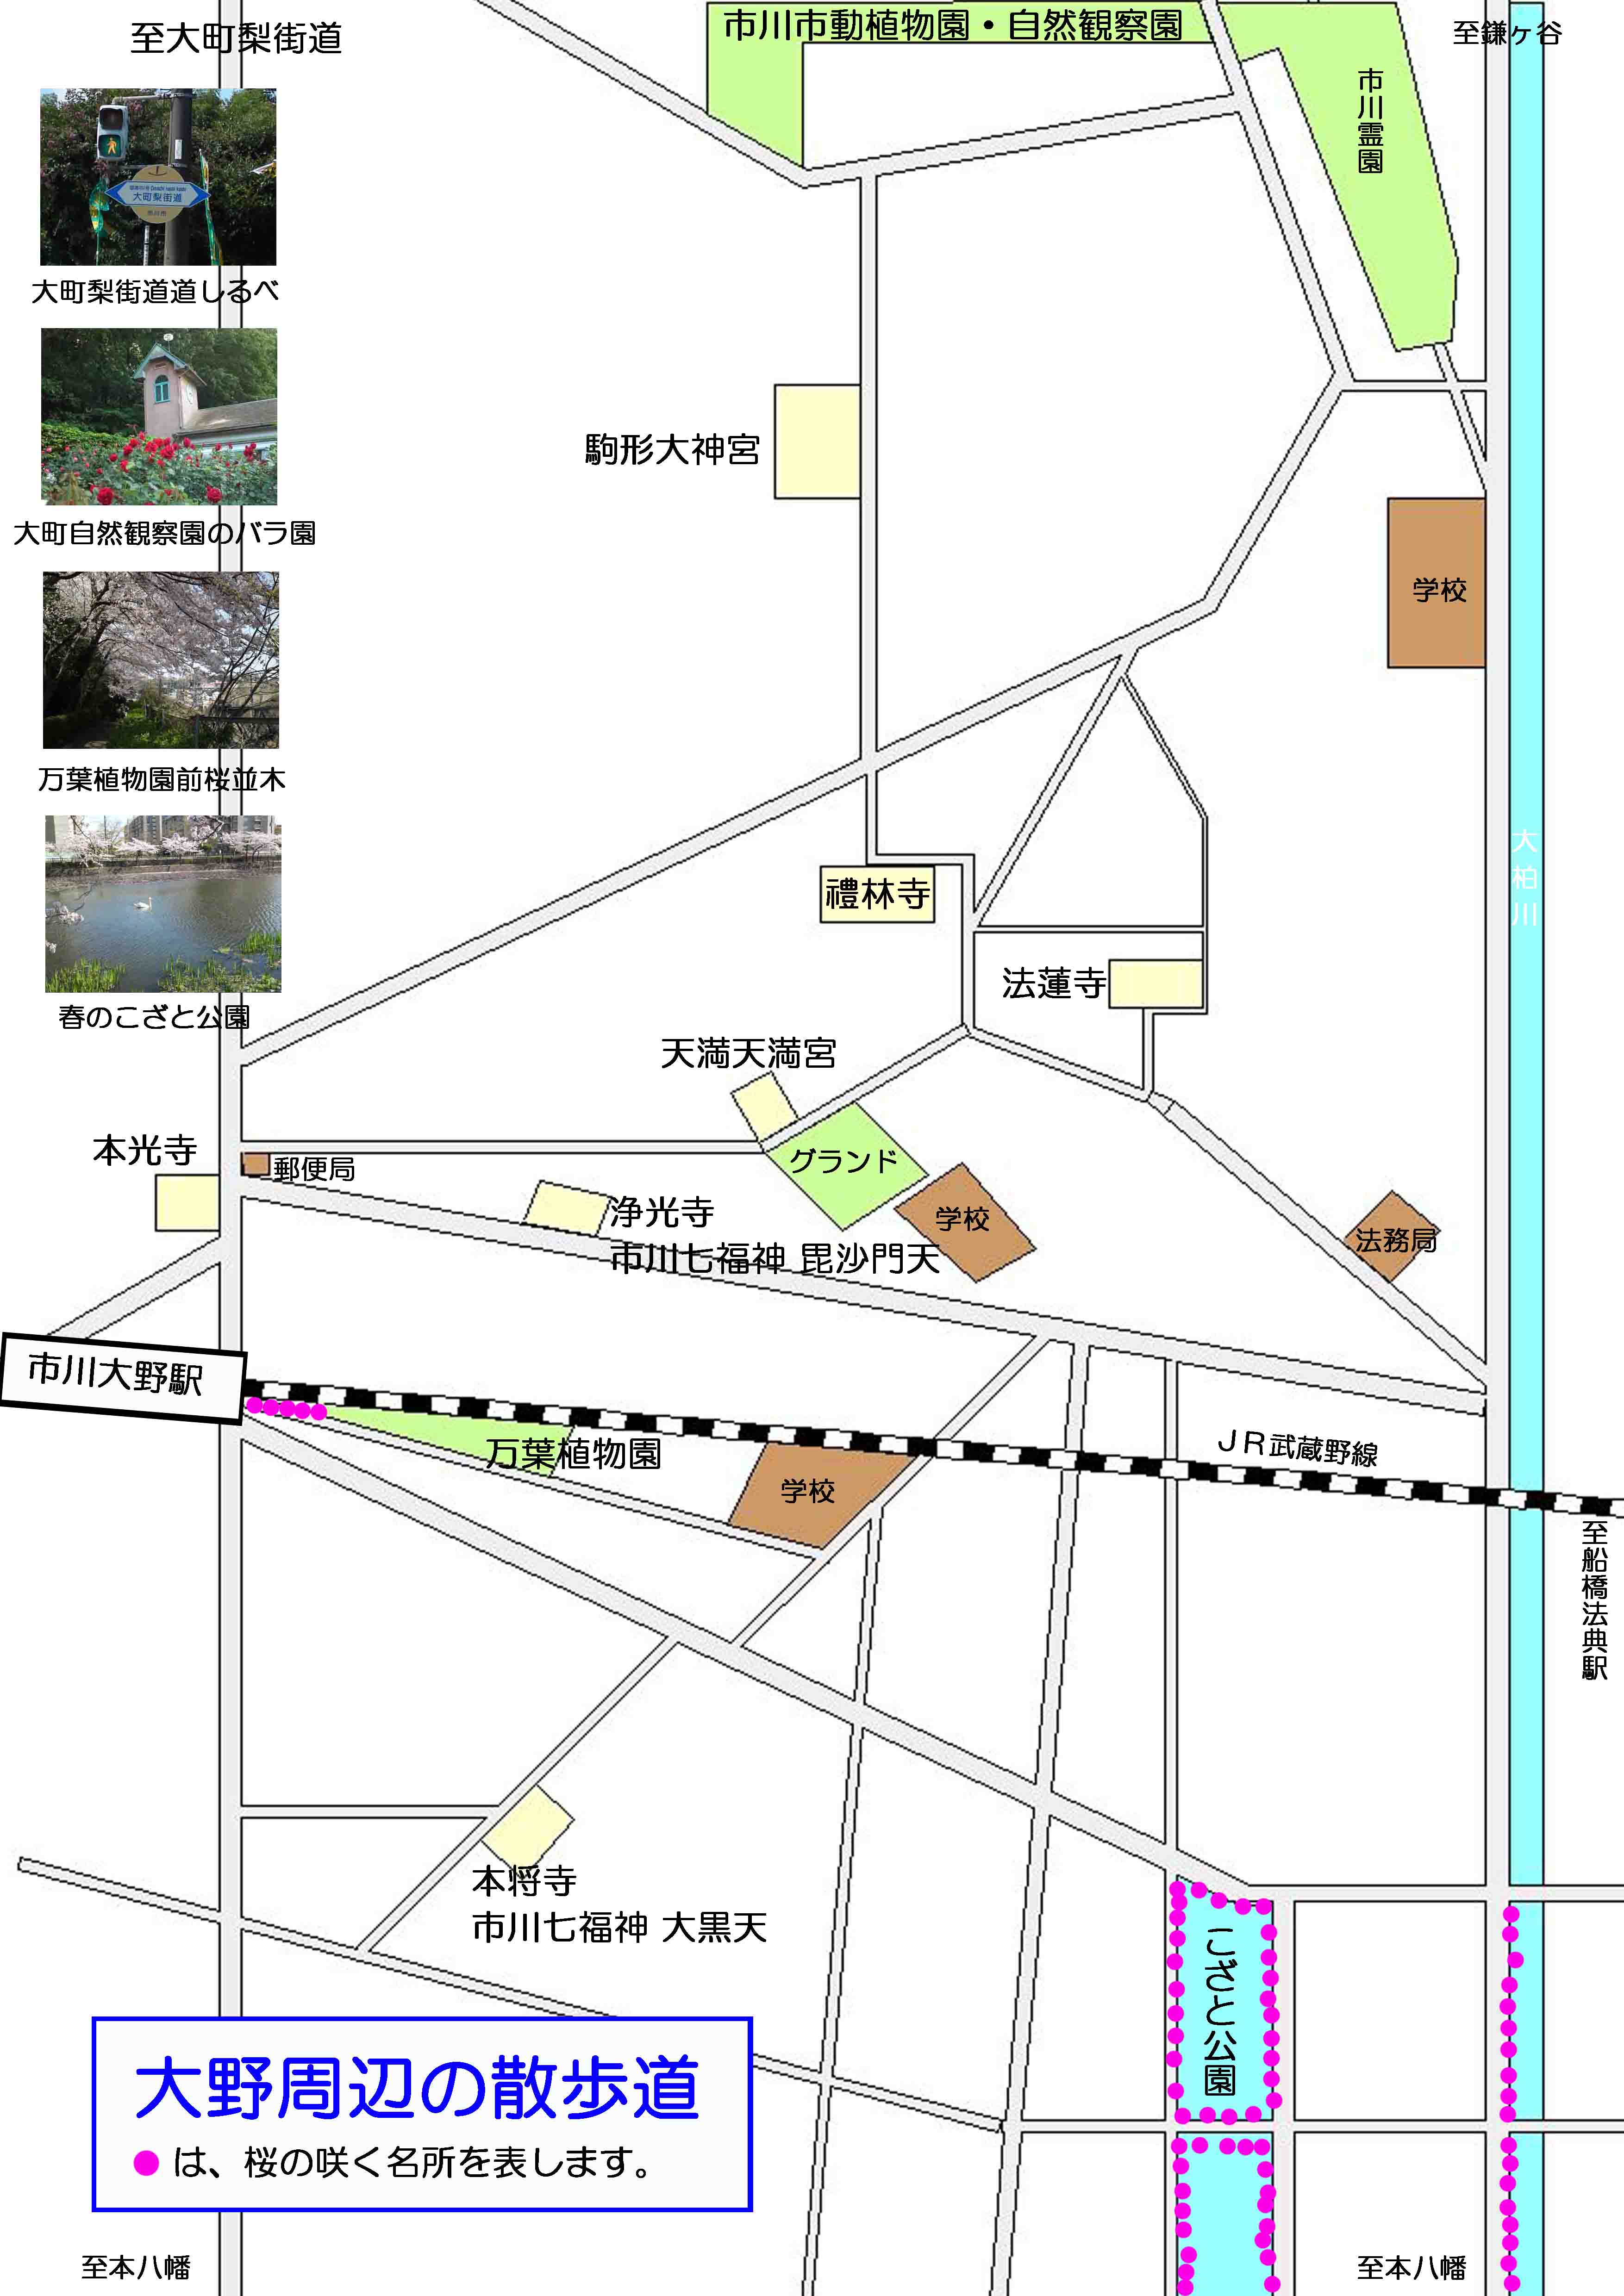 曽谷山法蓮寺周辺の案内図